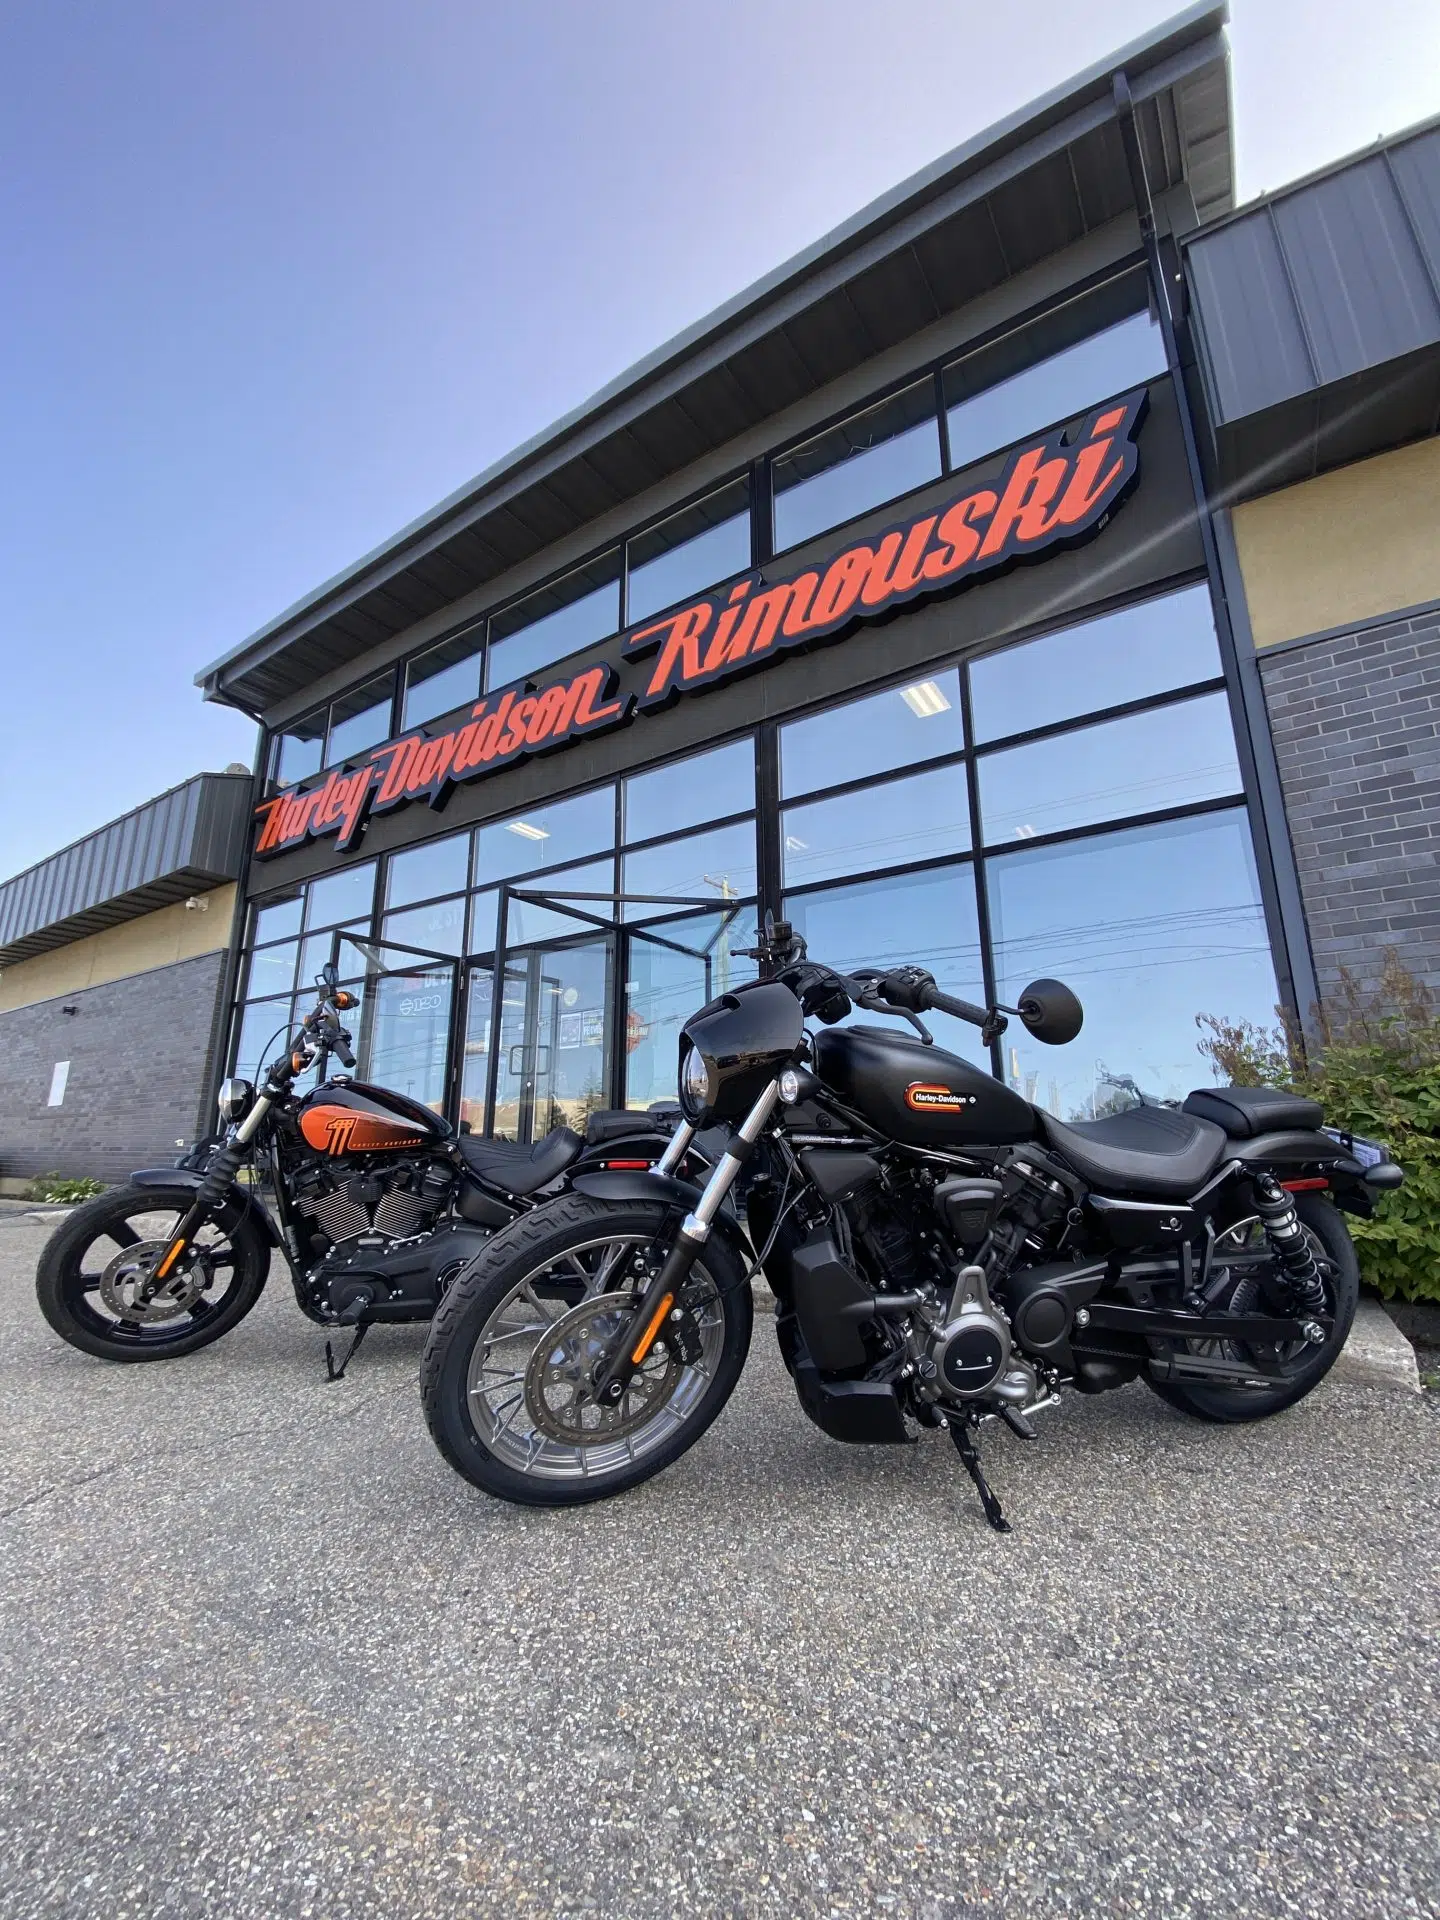 Harley-Davidson Rimouski graciously lent us motorcycles!